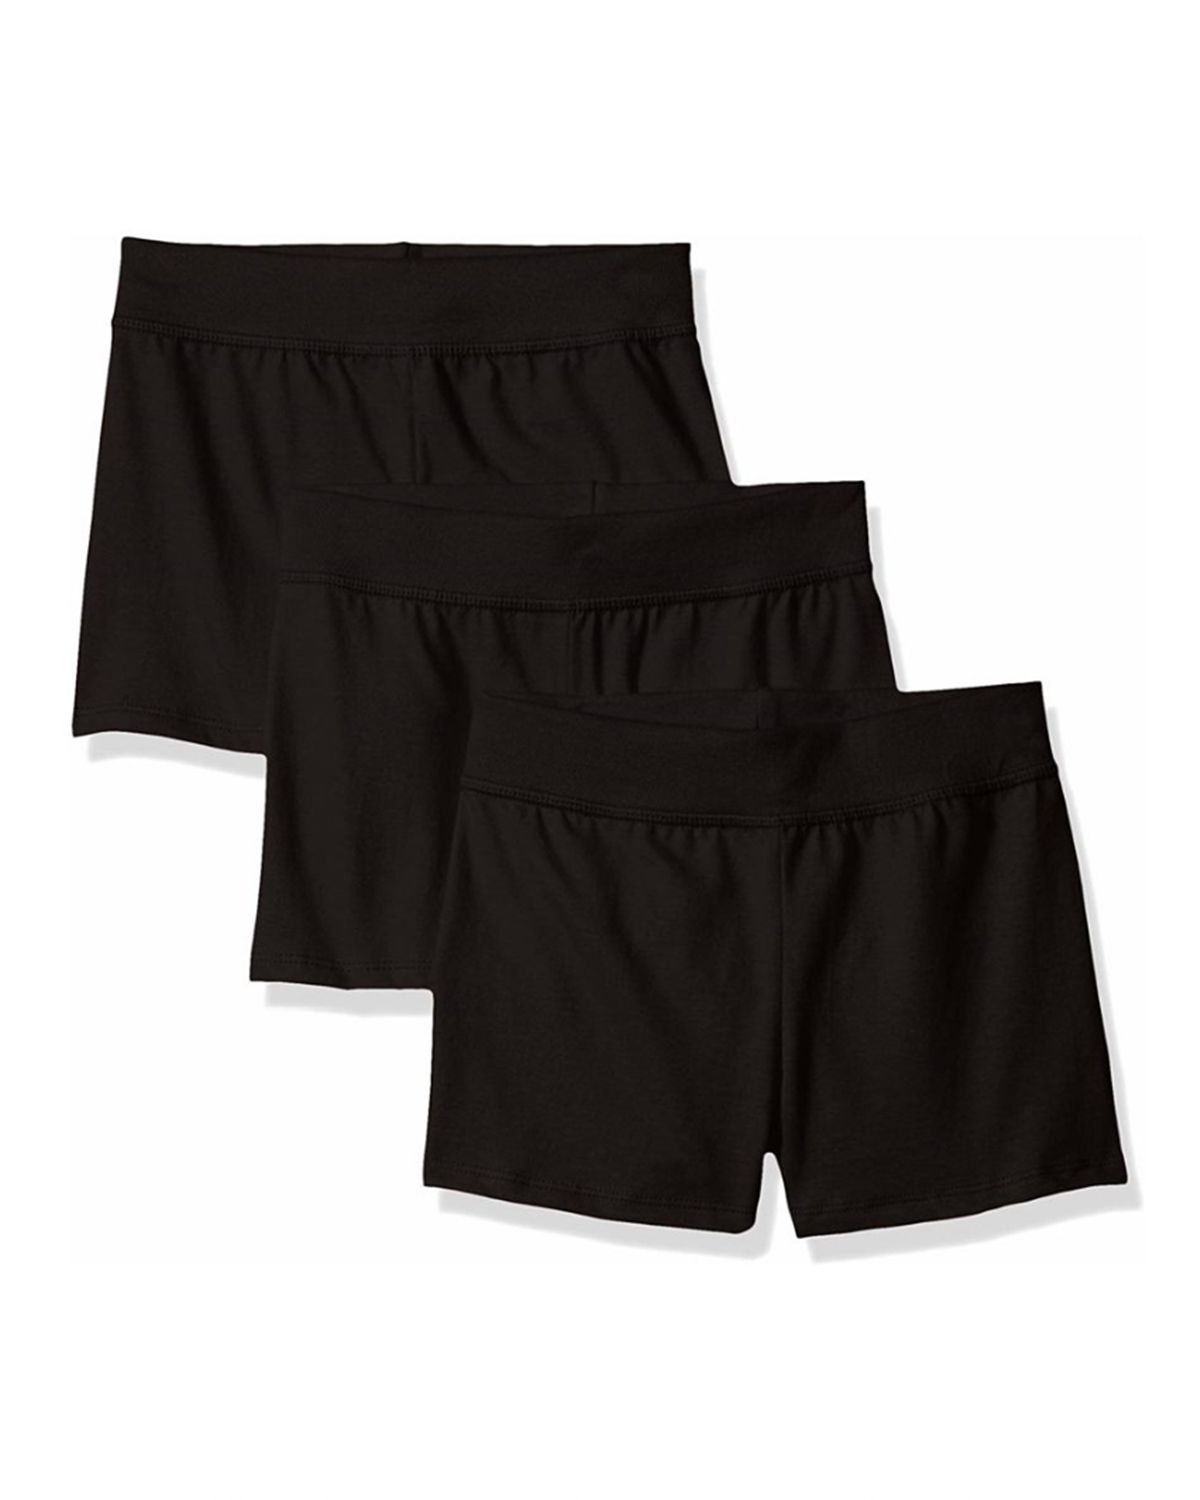 hanes women's jersey shorts